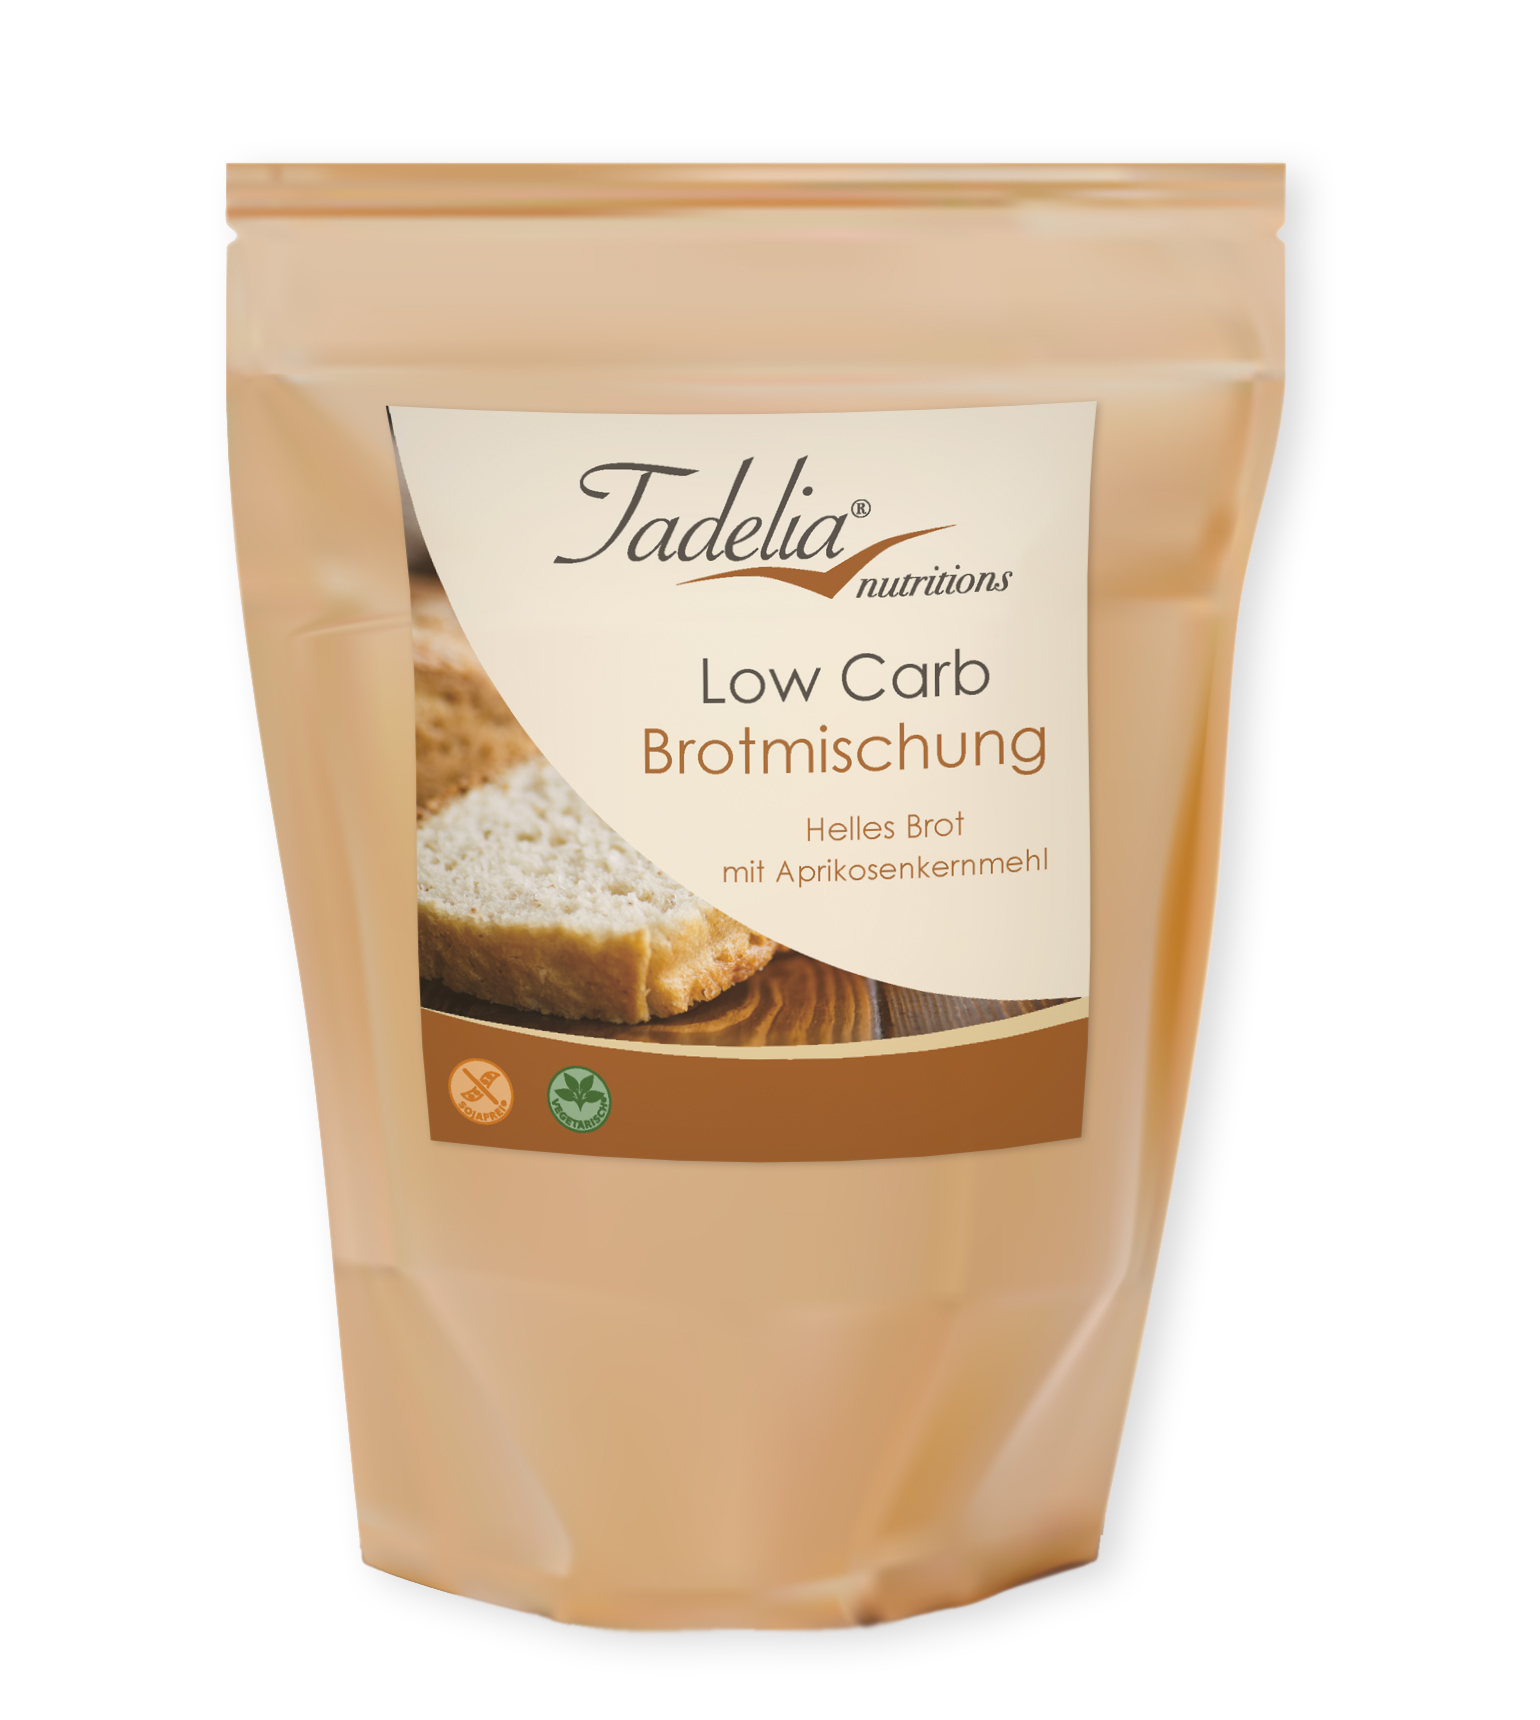 Tadelia® Low Carb Brotmischung Helles Brot mit Aprikosenkernmehl 250g | HCG Stoffwechselkur